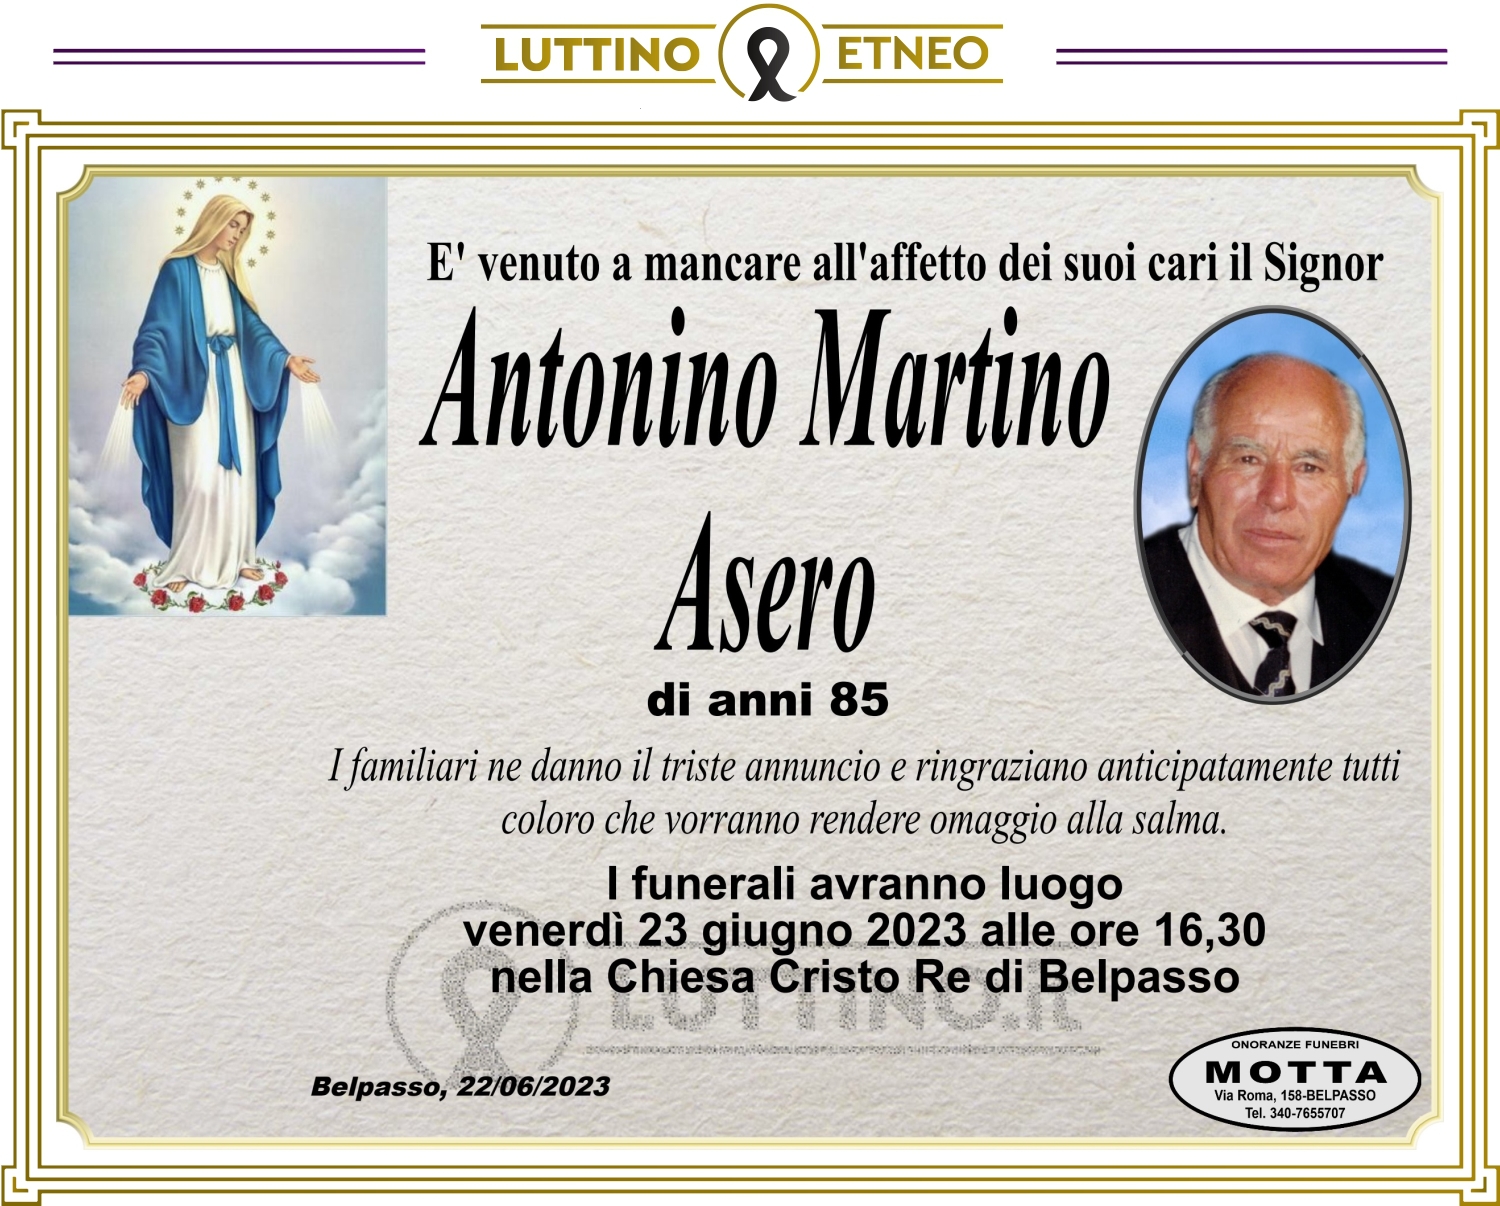 Antonino Martino Asero